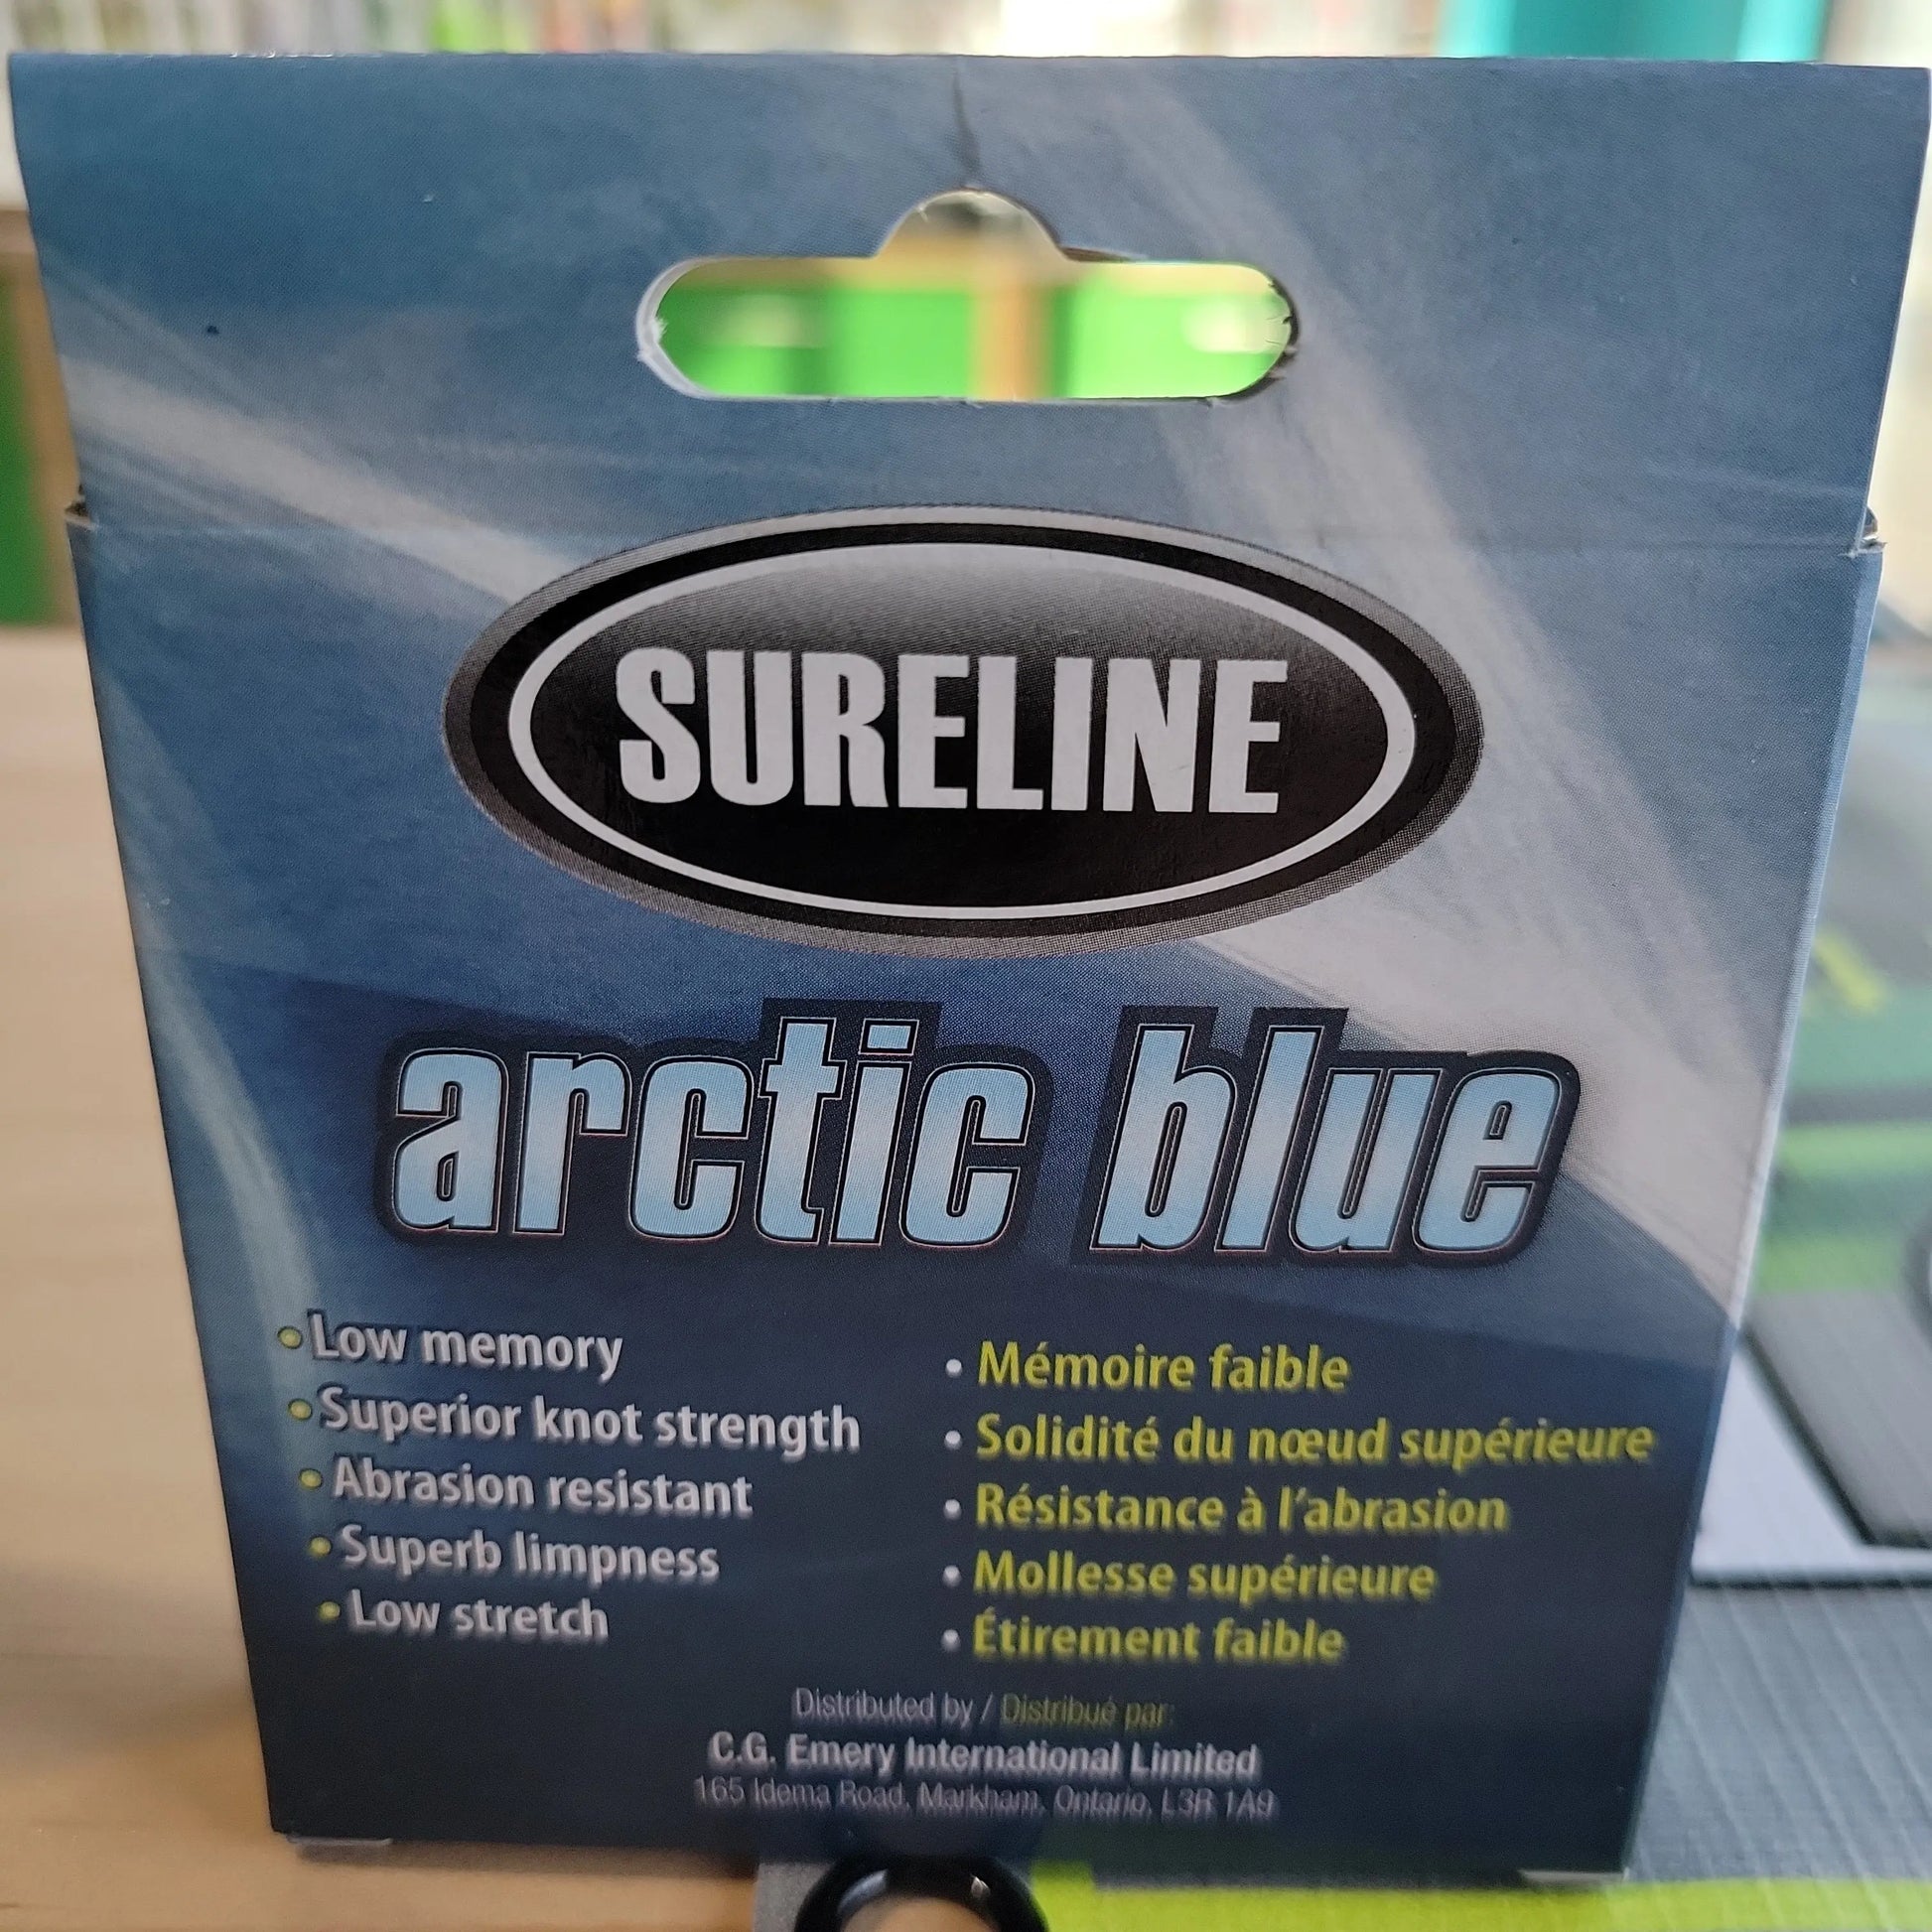 Sureline Arctic Blue Premium Ice Fishing Monofilament 10lb 110yds C.G. Emery